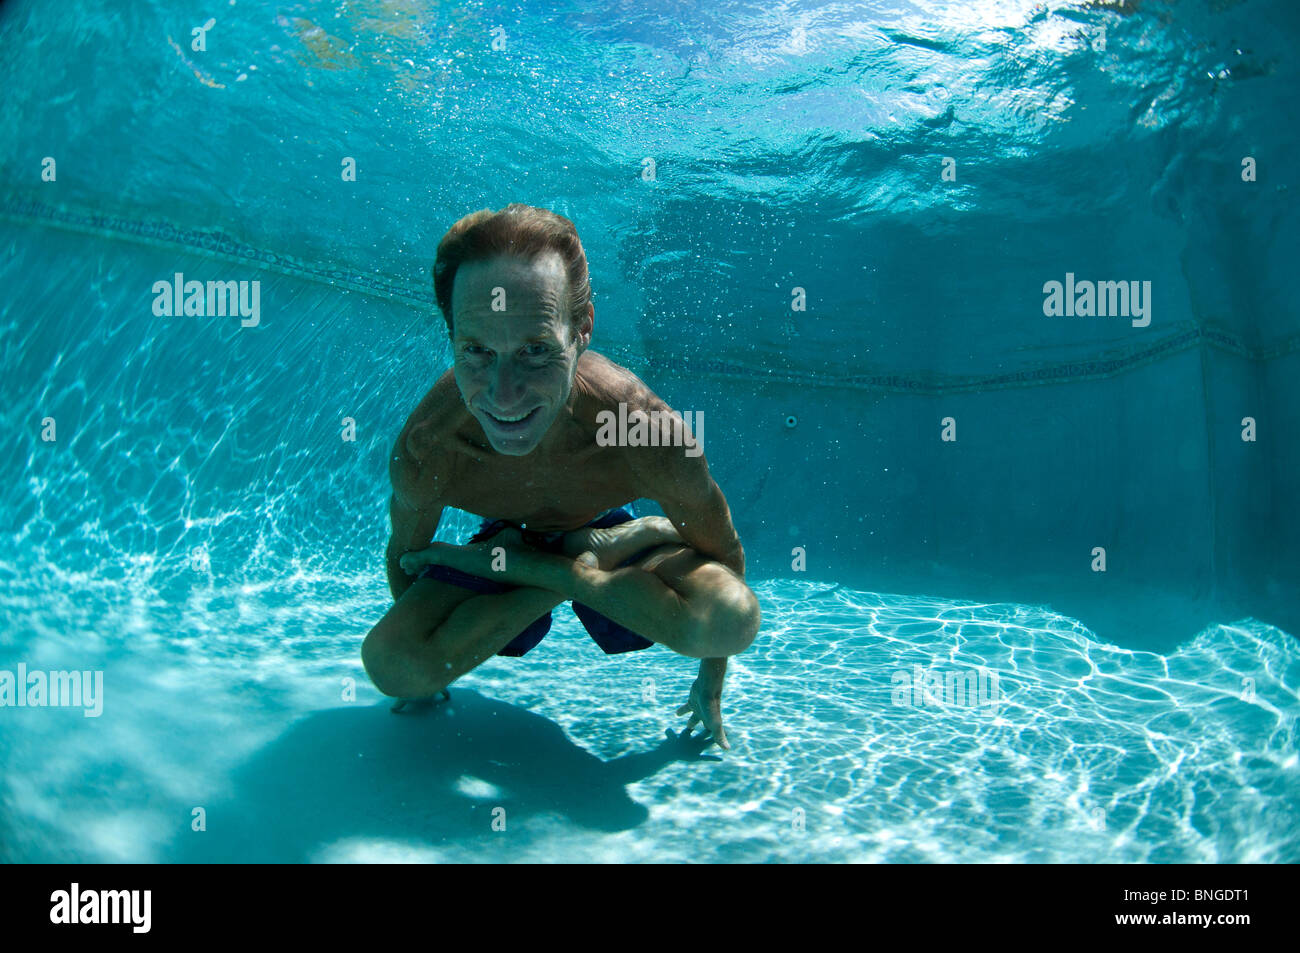 https://c8.alamy.com/comp/BNGDT1/man-doing-yoga-underwater-in-pool-kauai-hawaii-BNGDT1.jpg